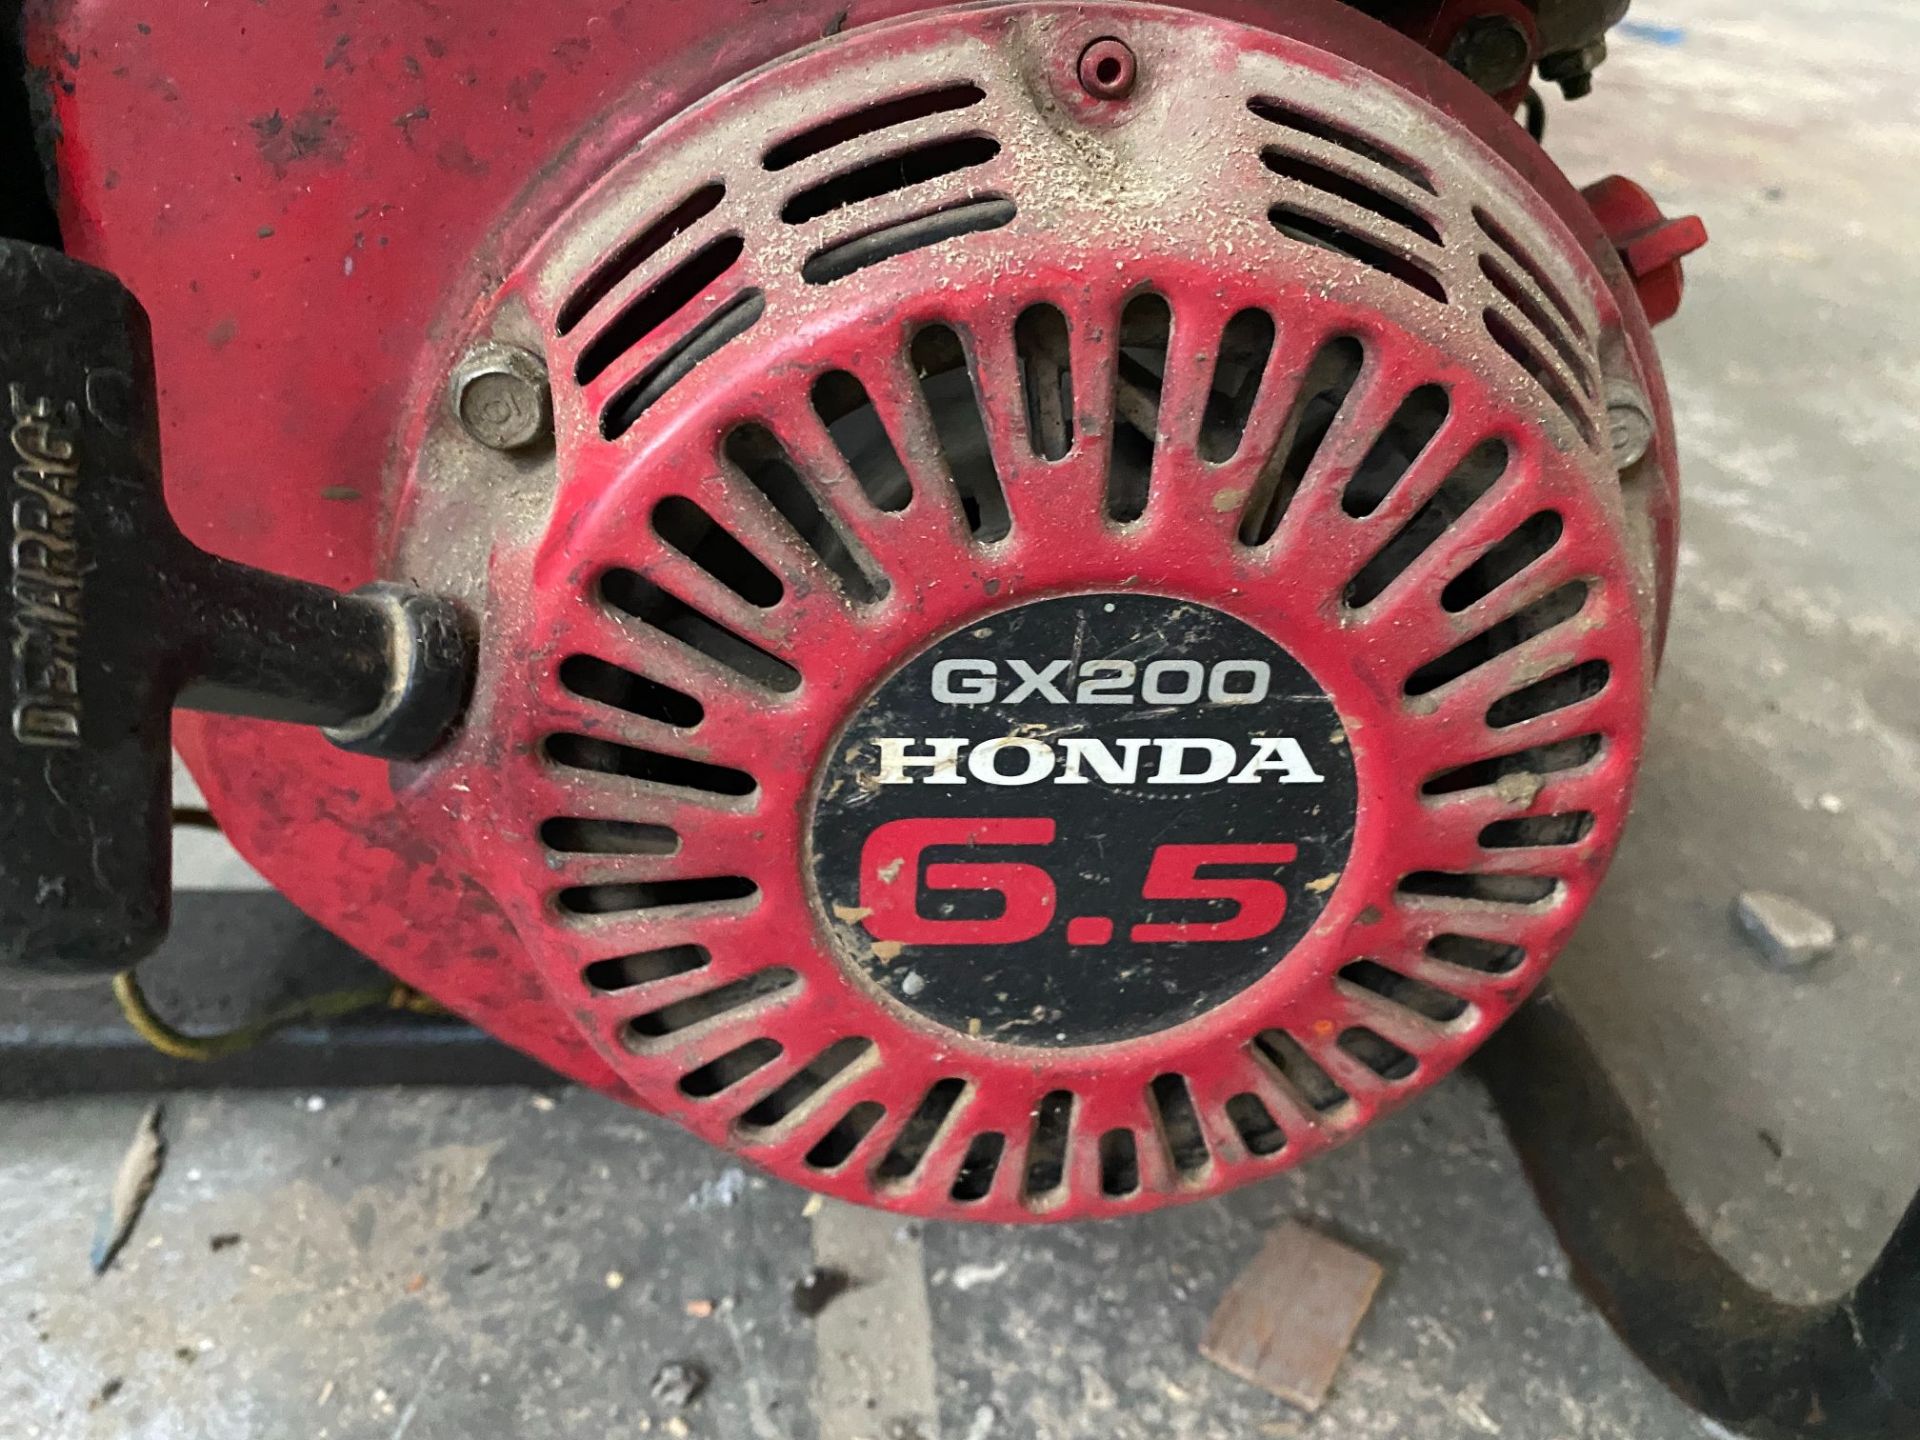 Honda GX200 6.6 HP portable petrol generator (condition unknown) - Bild 2 aus 2